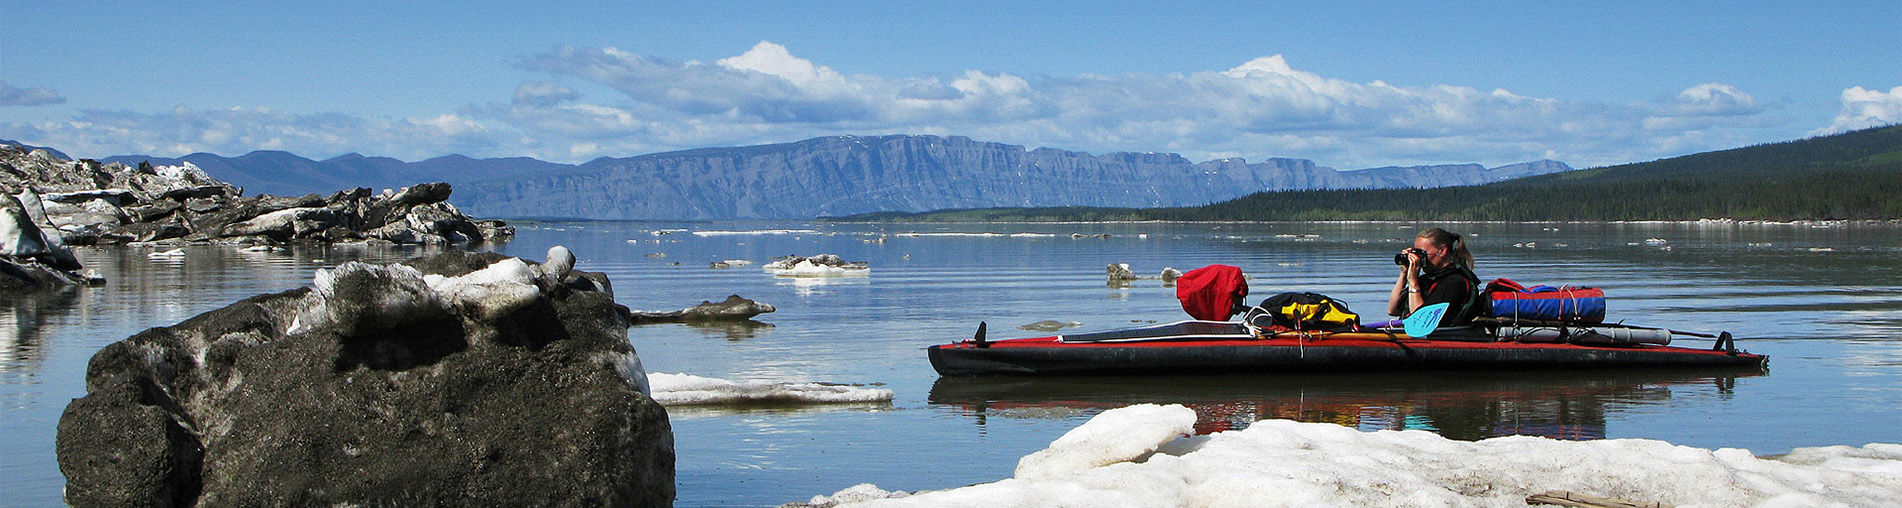 KANADA-ALASKA 4100 Kilometer im Kanu vom Mackenzie zum Yukon